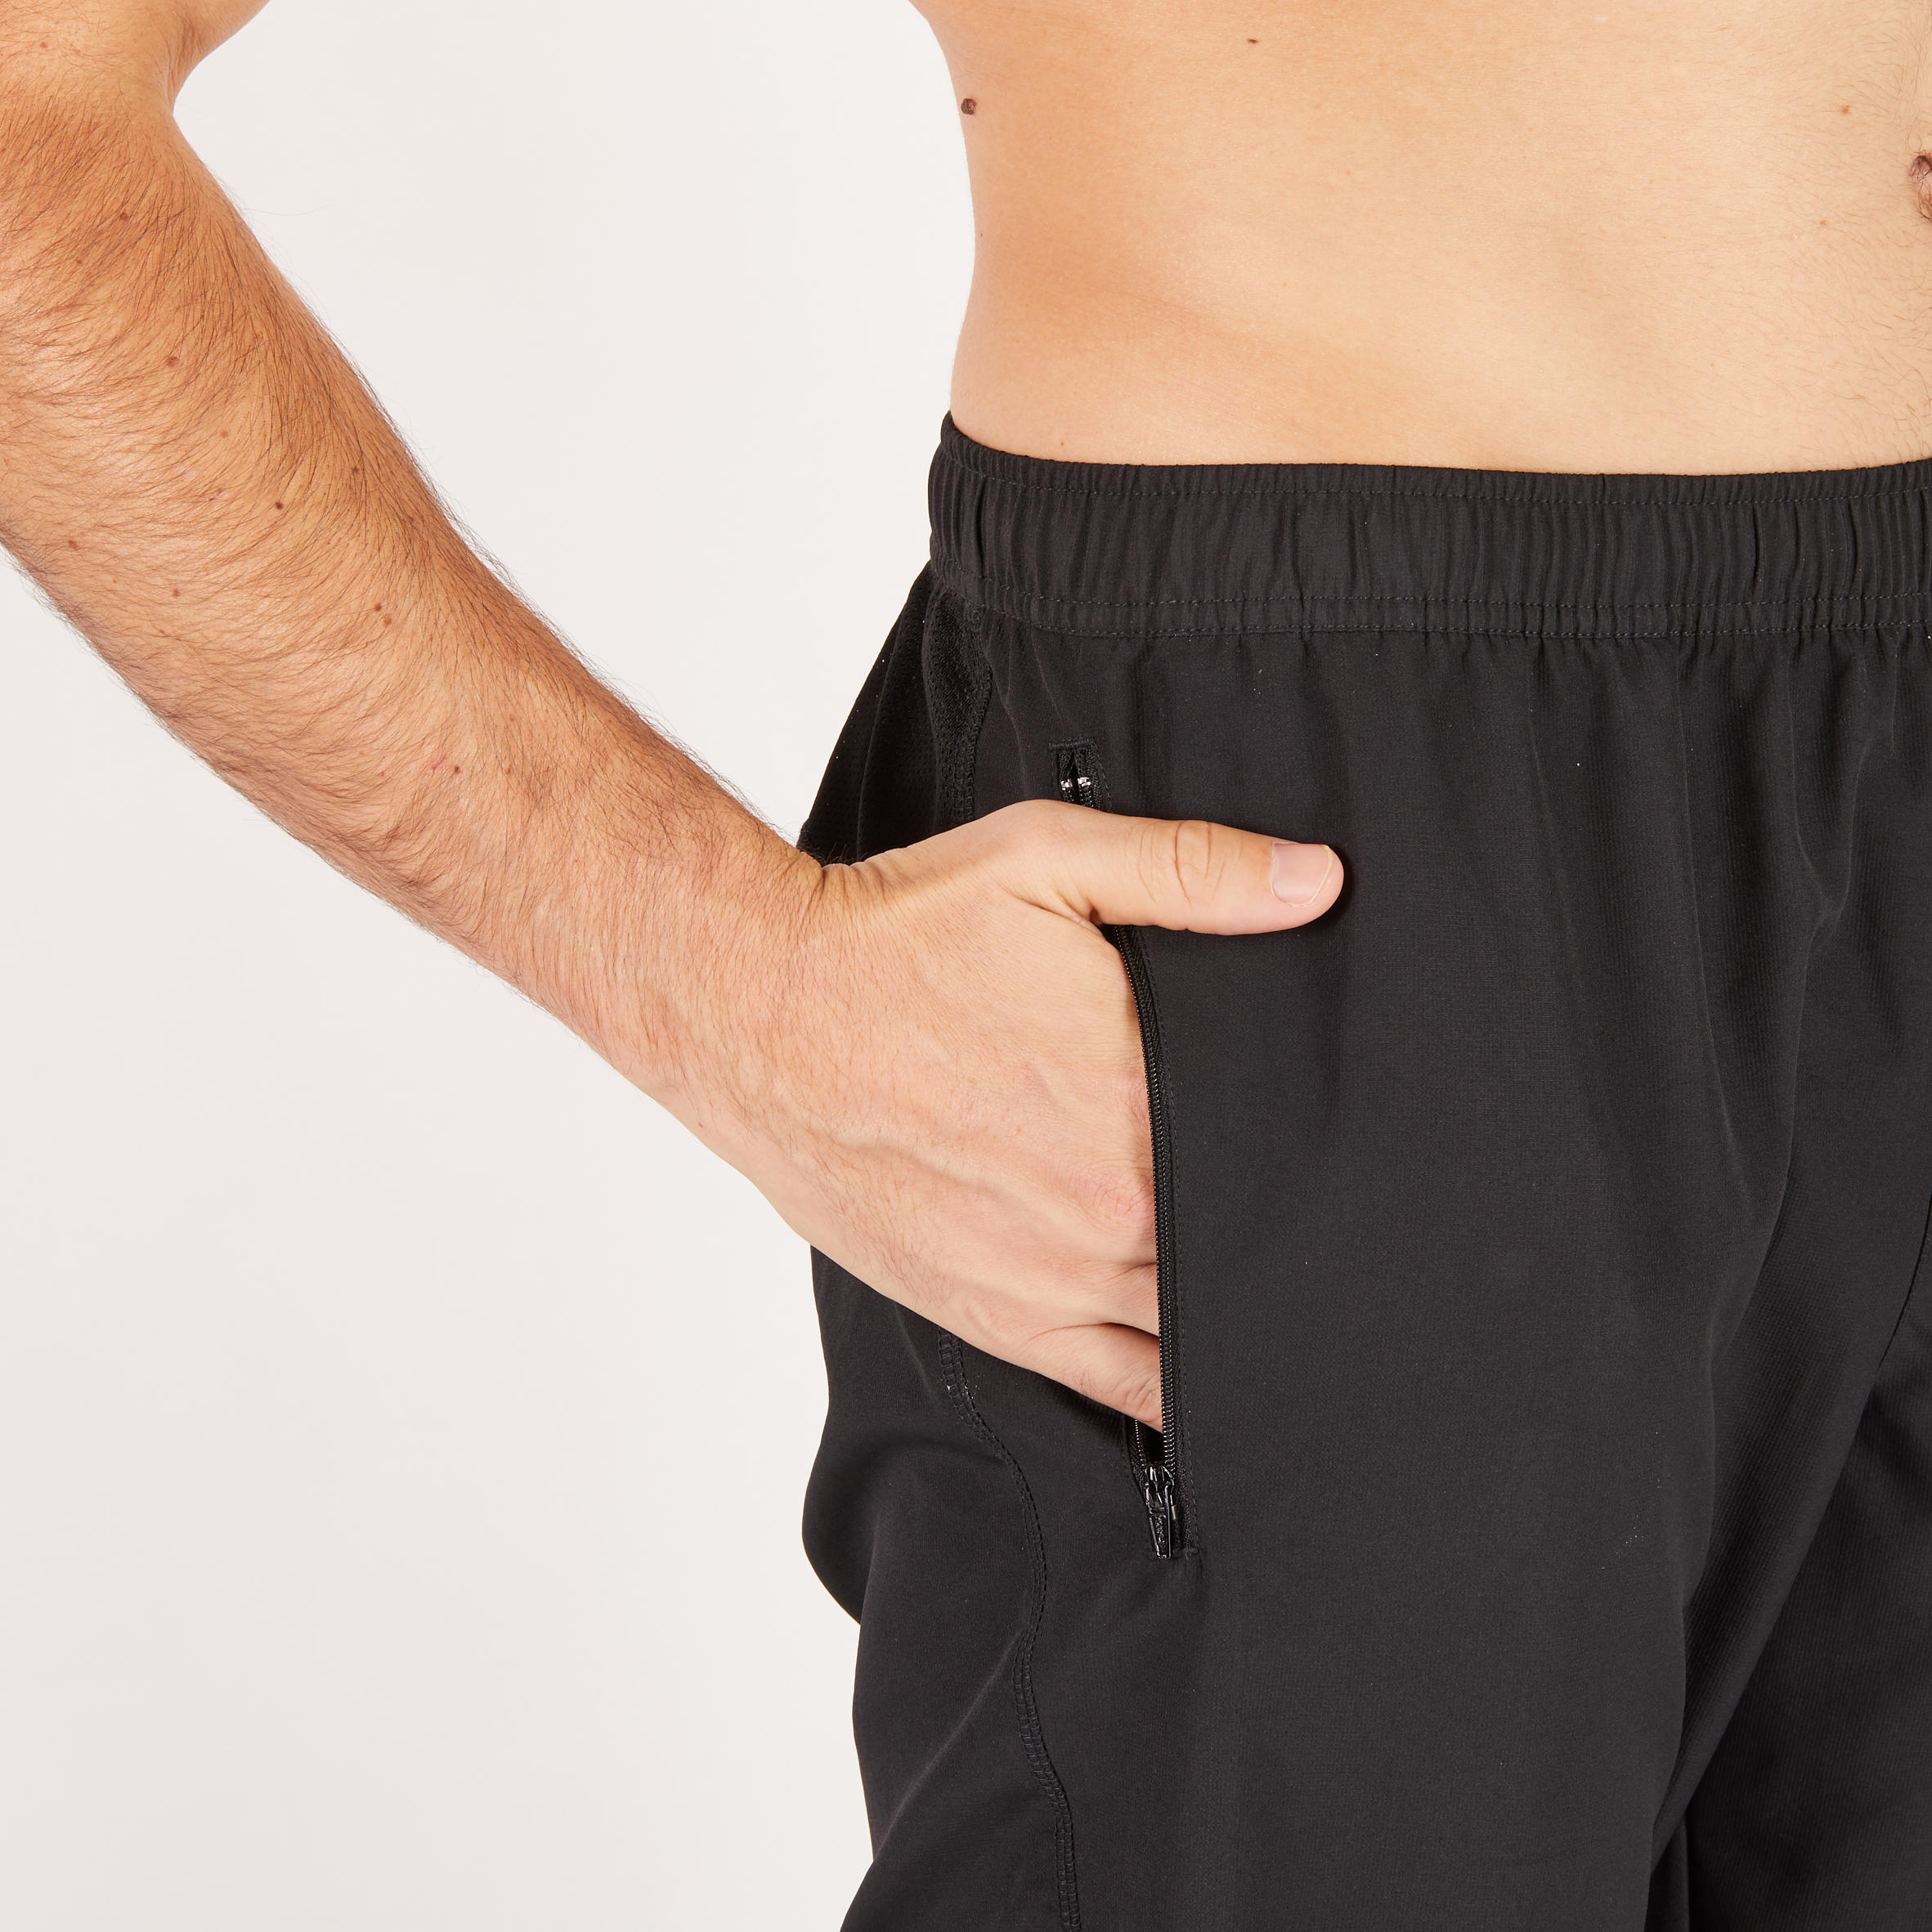 Men's Breathable Running Track Pants - BLACK